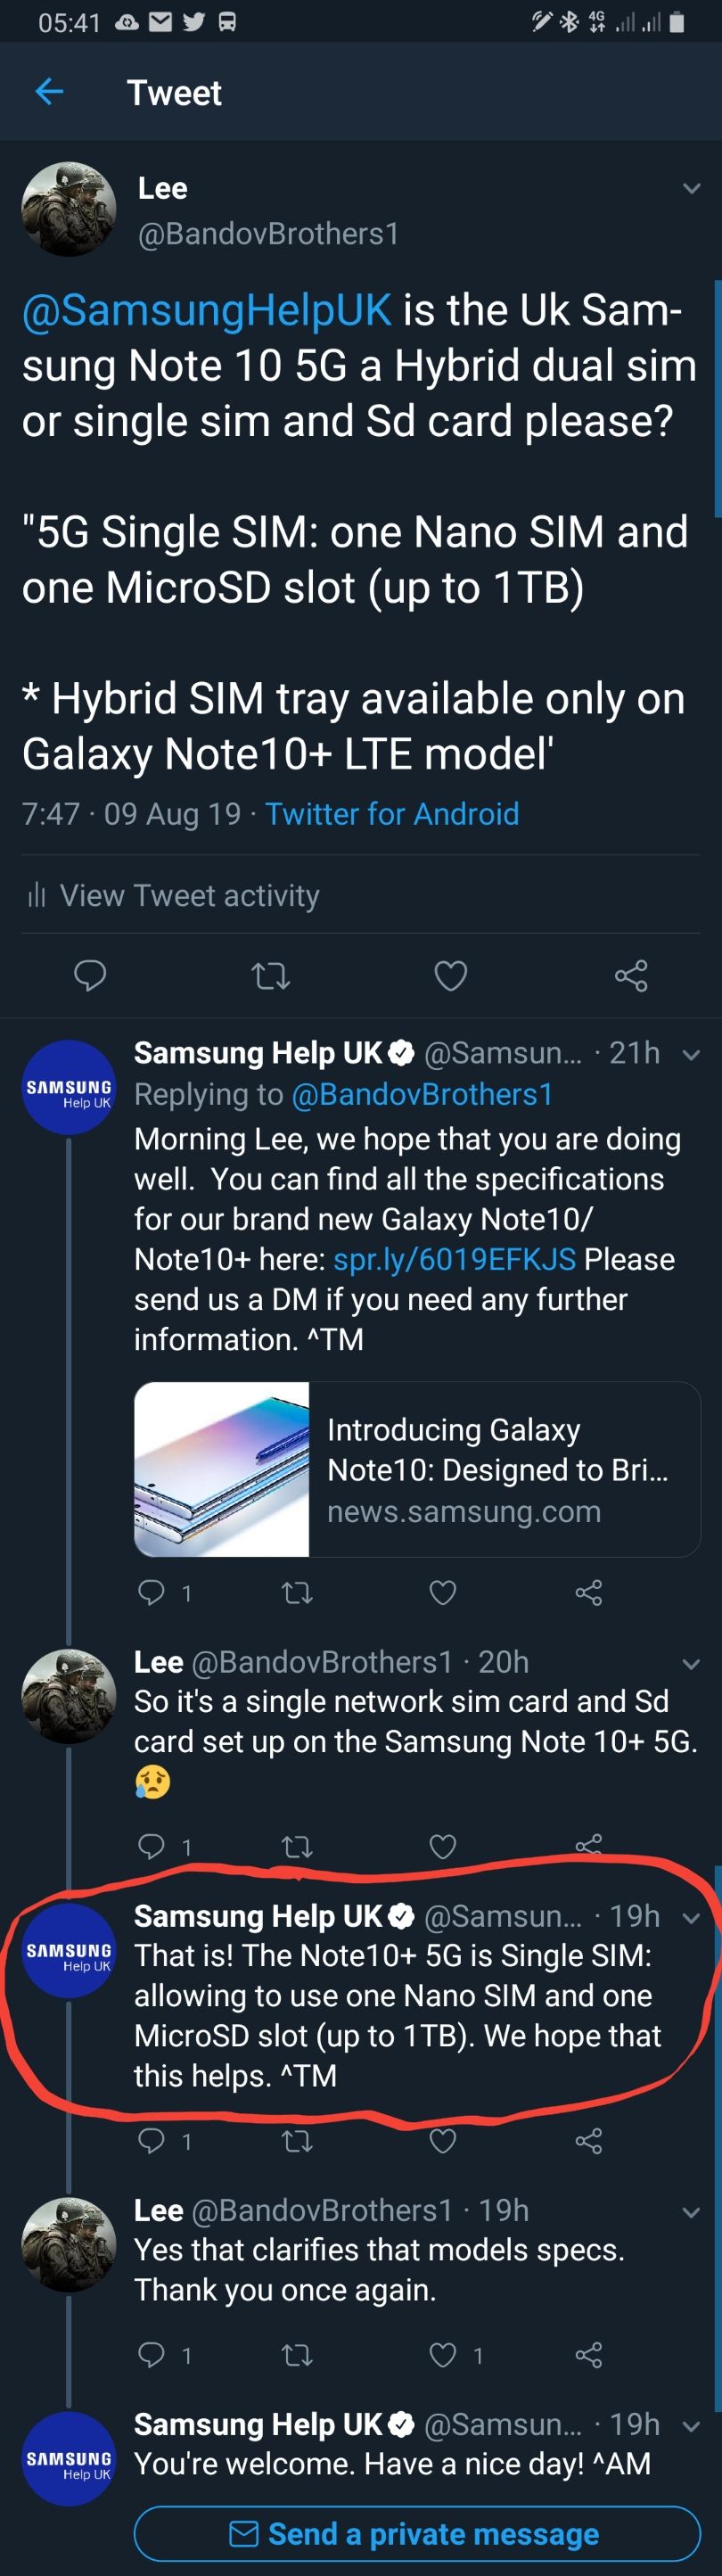 deanna schwarz recommends Samsung Sam Rule 24